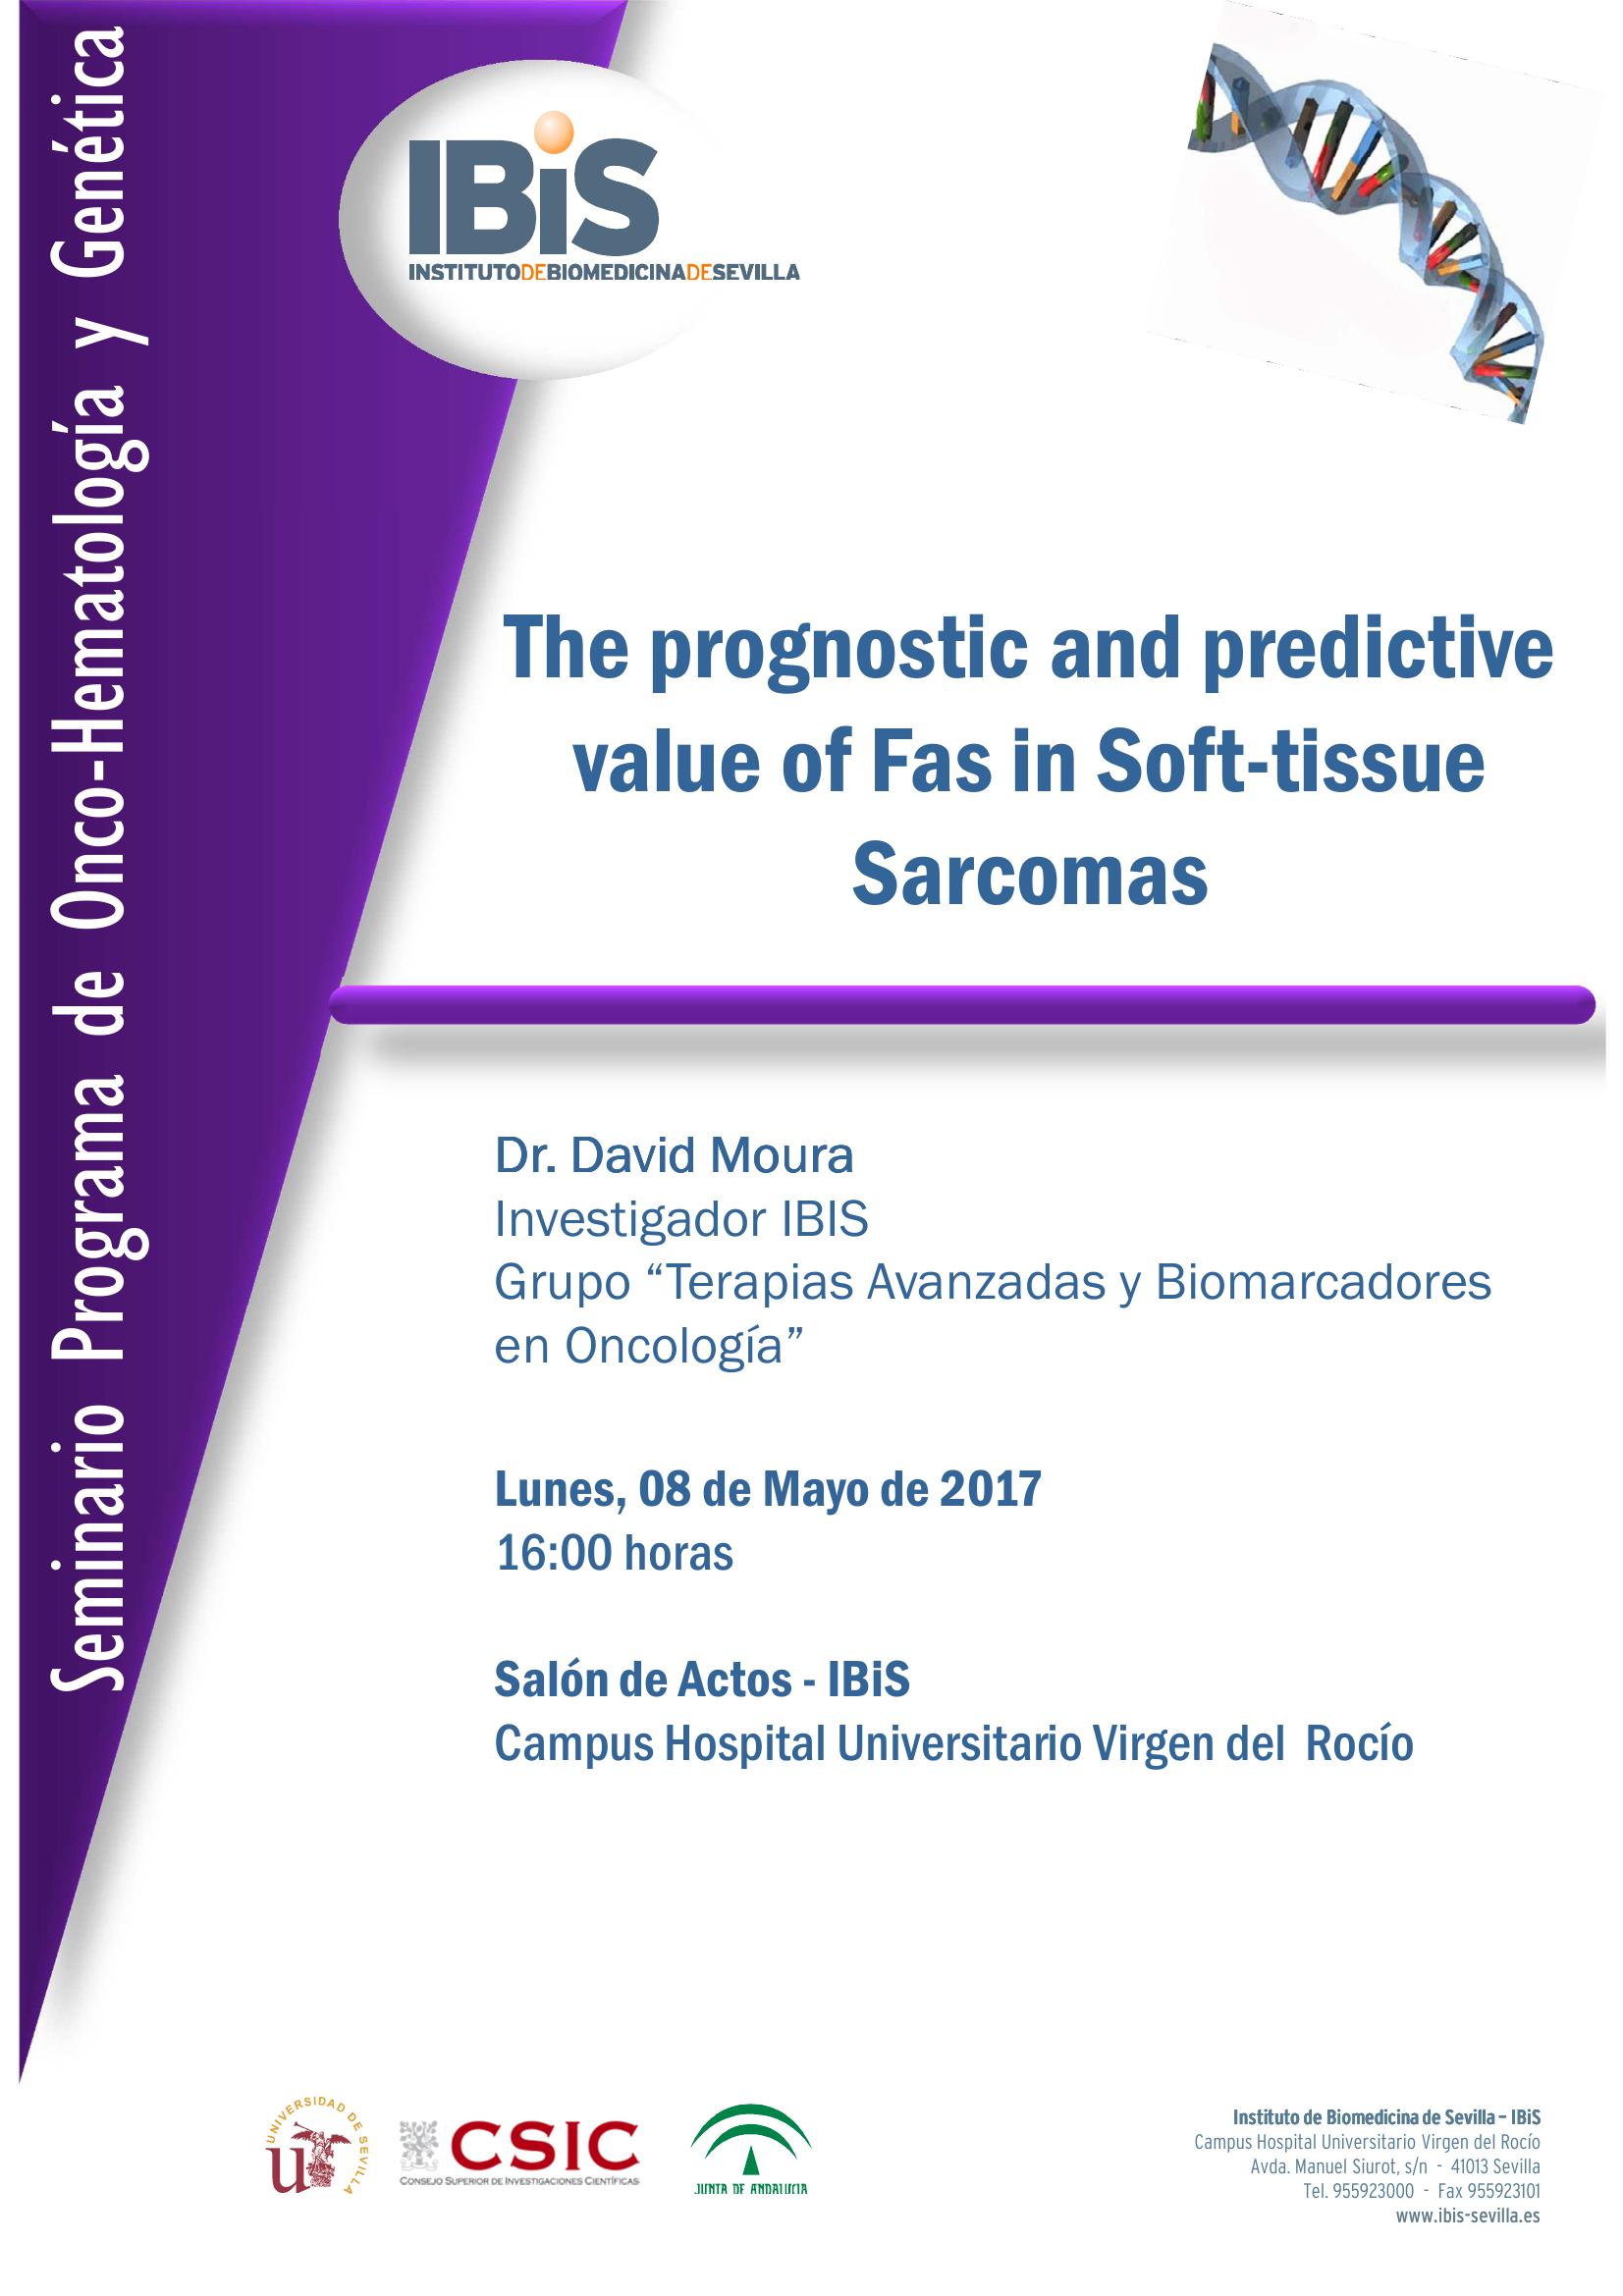 Poster: The prognostic and predictive value of Fas in Soft-tissue Sarcomas